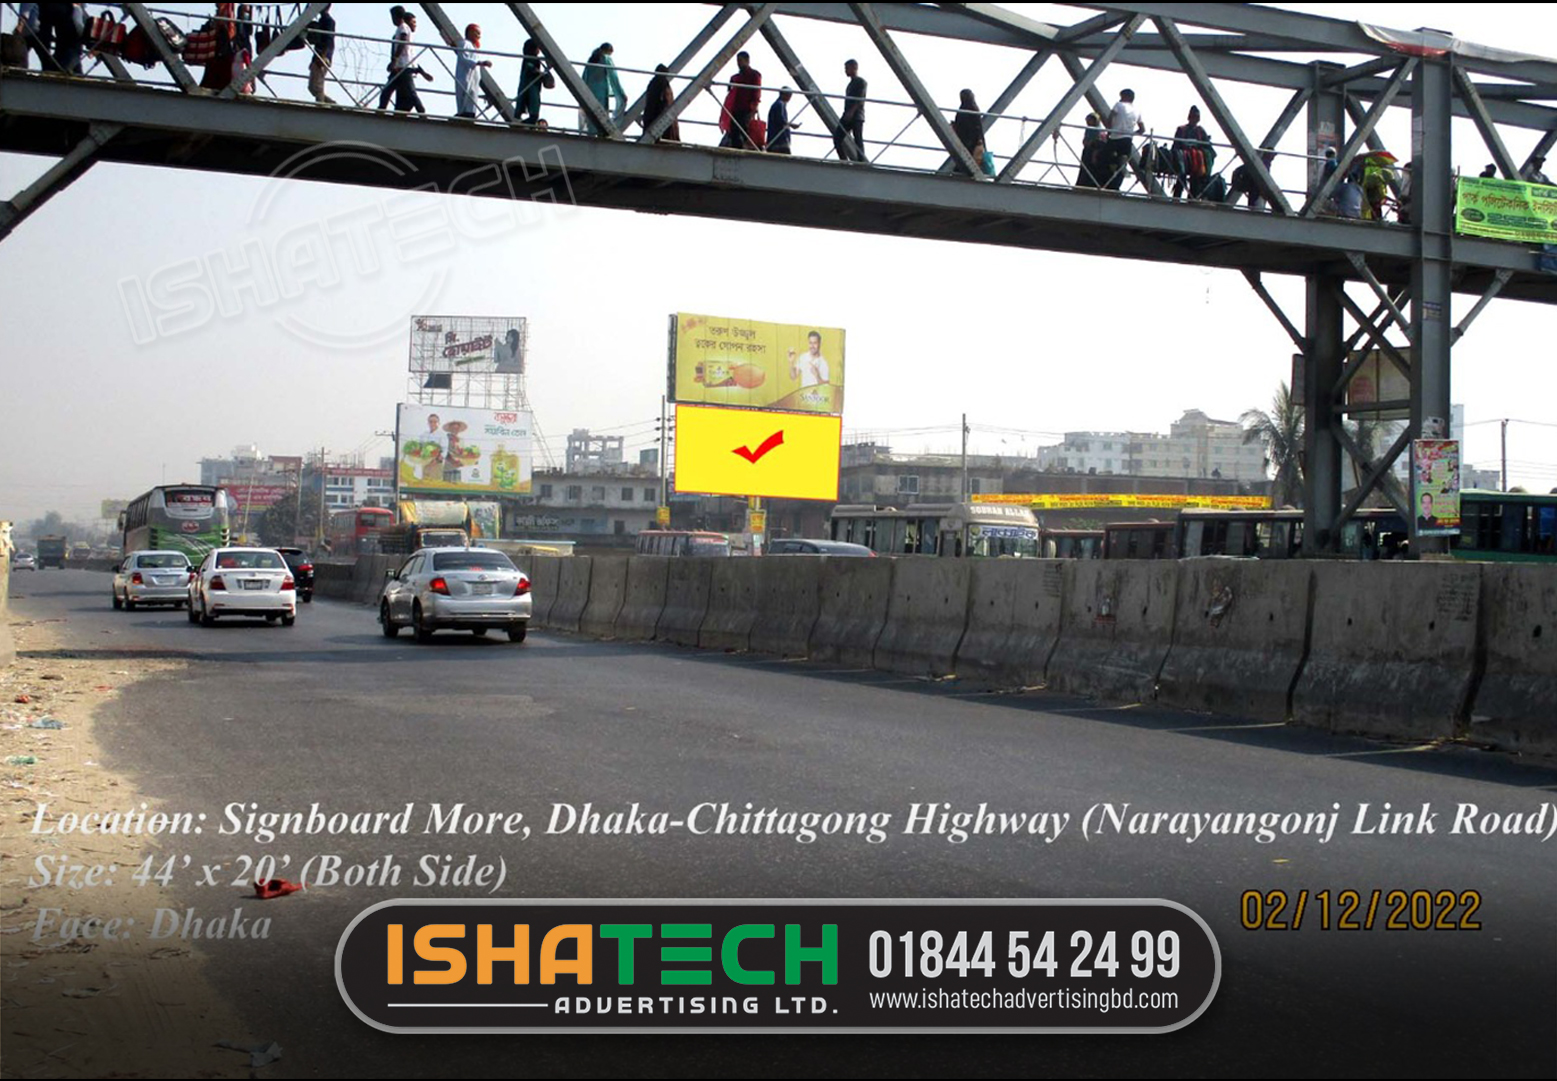 DHAKA CHITTAGONG HIGHWAY ROAD SIDE BILLBOARD RENTAL AND MAKING SERVICE IN DHAKA, BANGLADESH. SIGNBOARD MORE BD